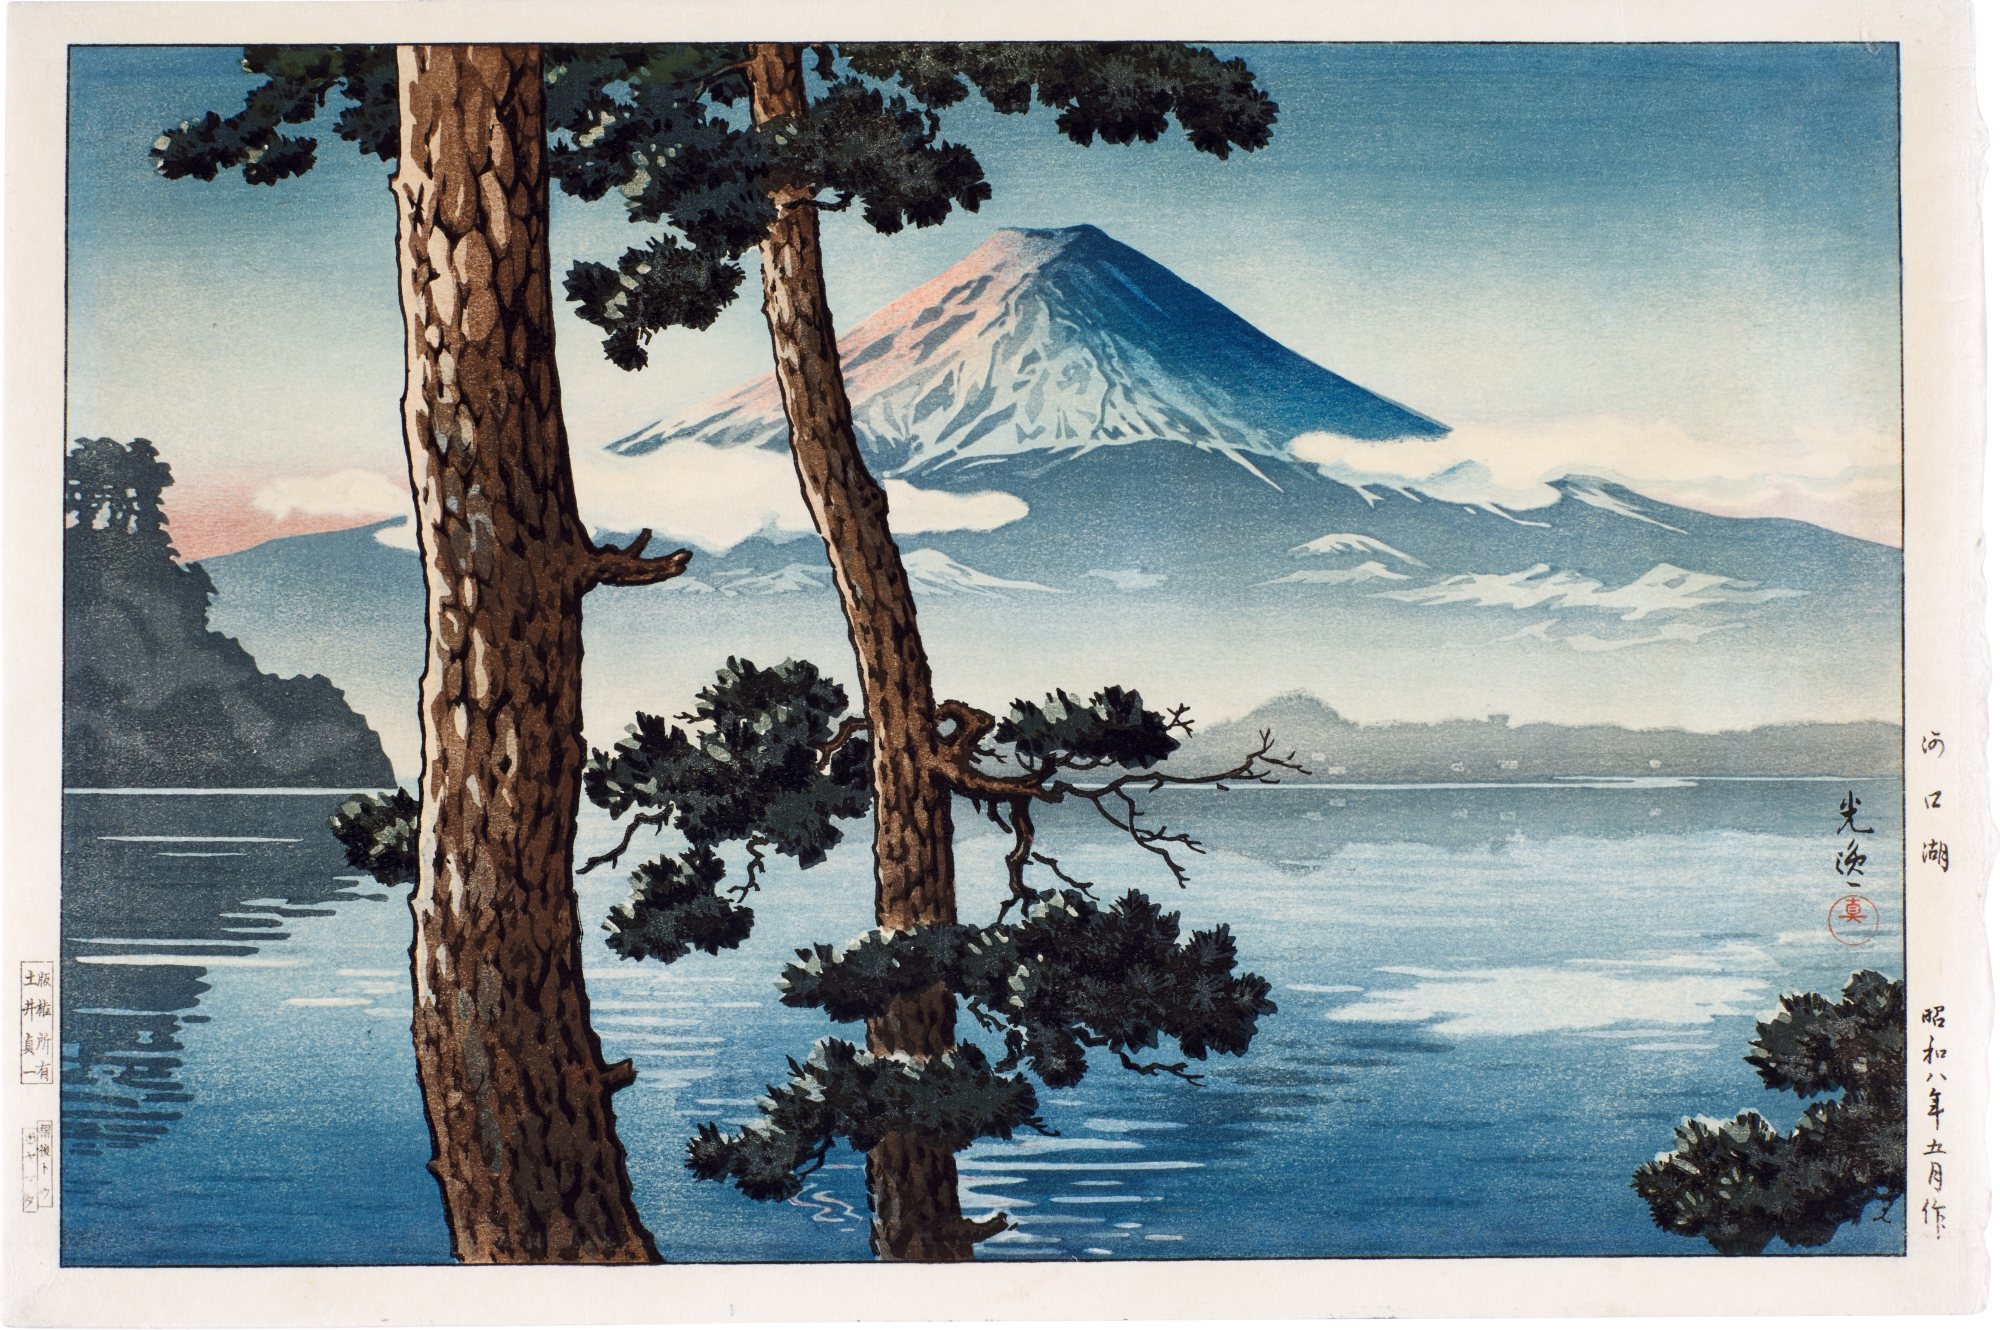 Lake Kawaguchi ( Kawaguchi-ko ) by Tsuchiya Koitsu, May 1933